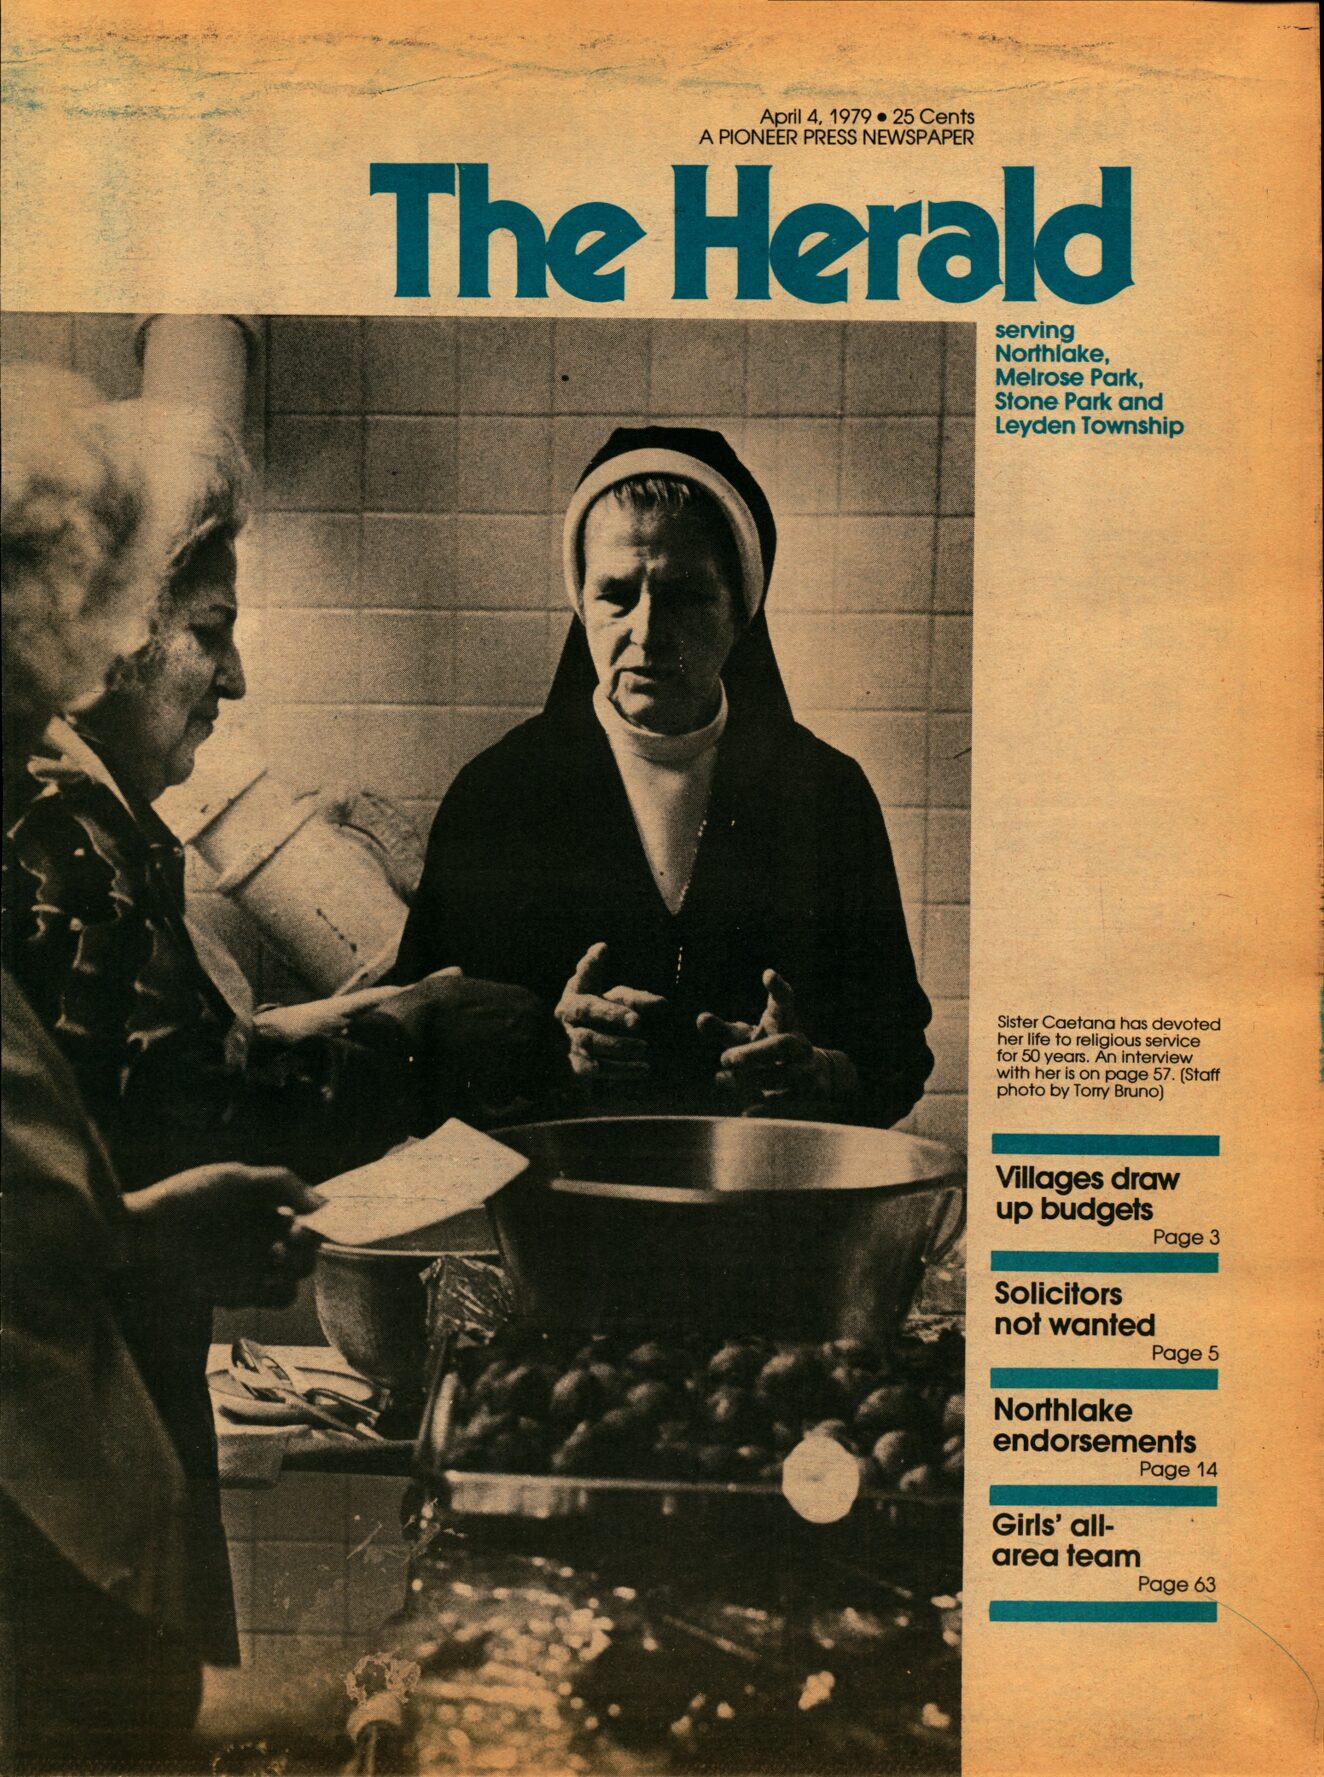 The Herald – 19790404